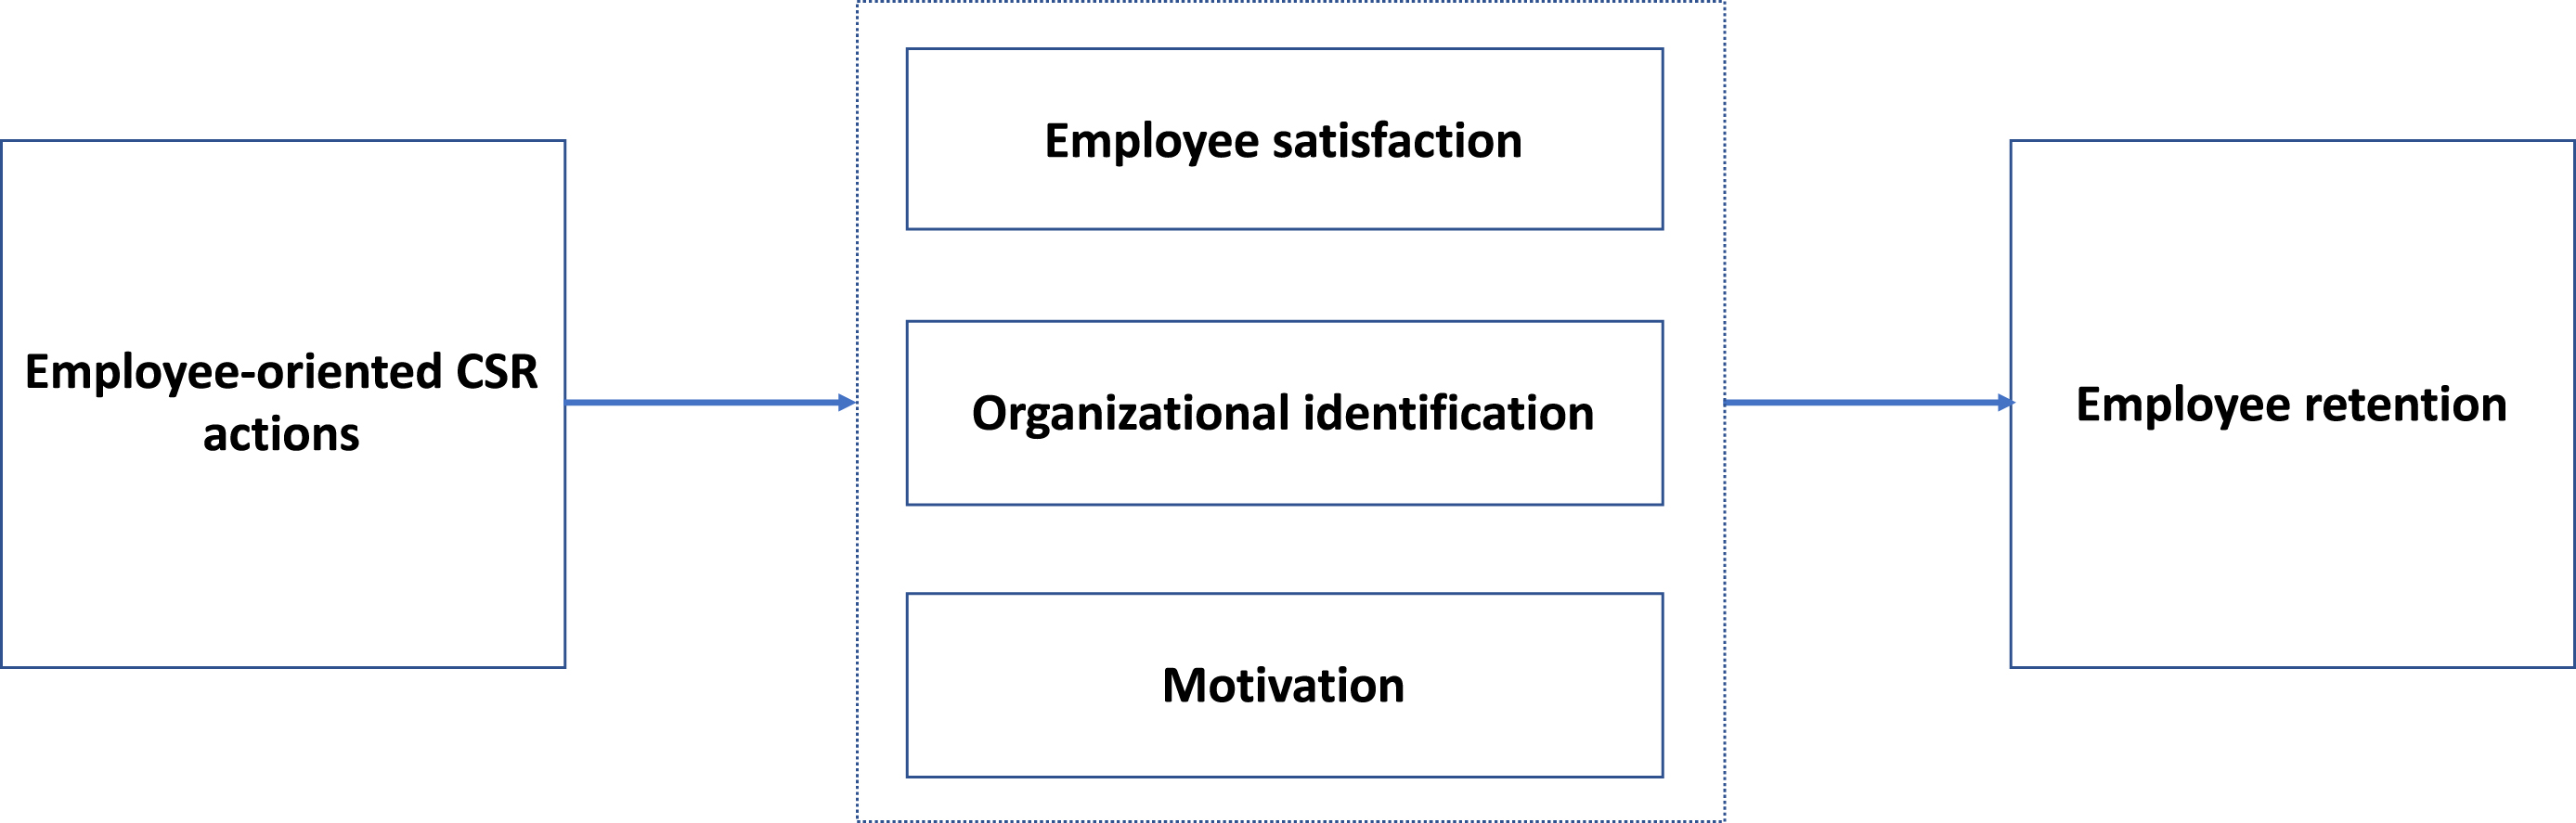 CSR and employee retention.